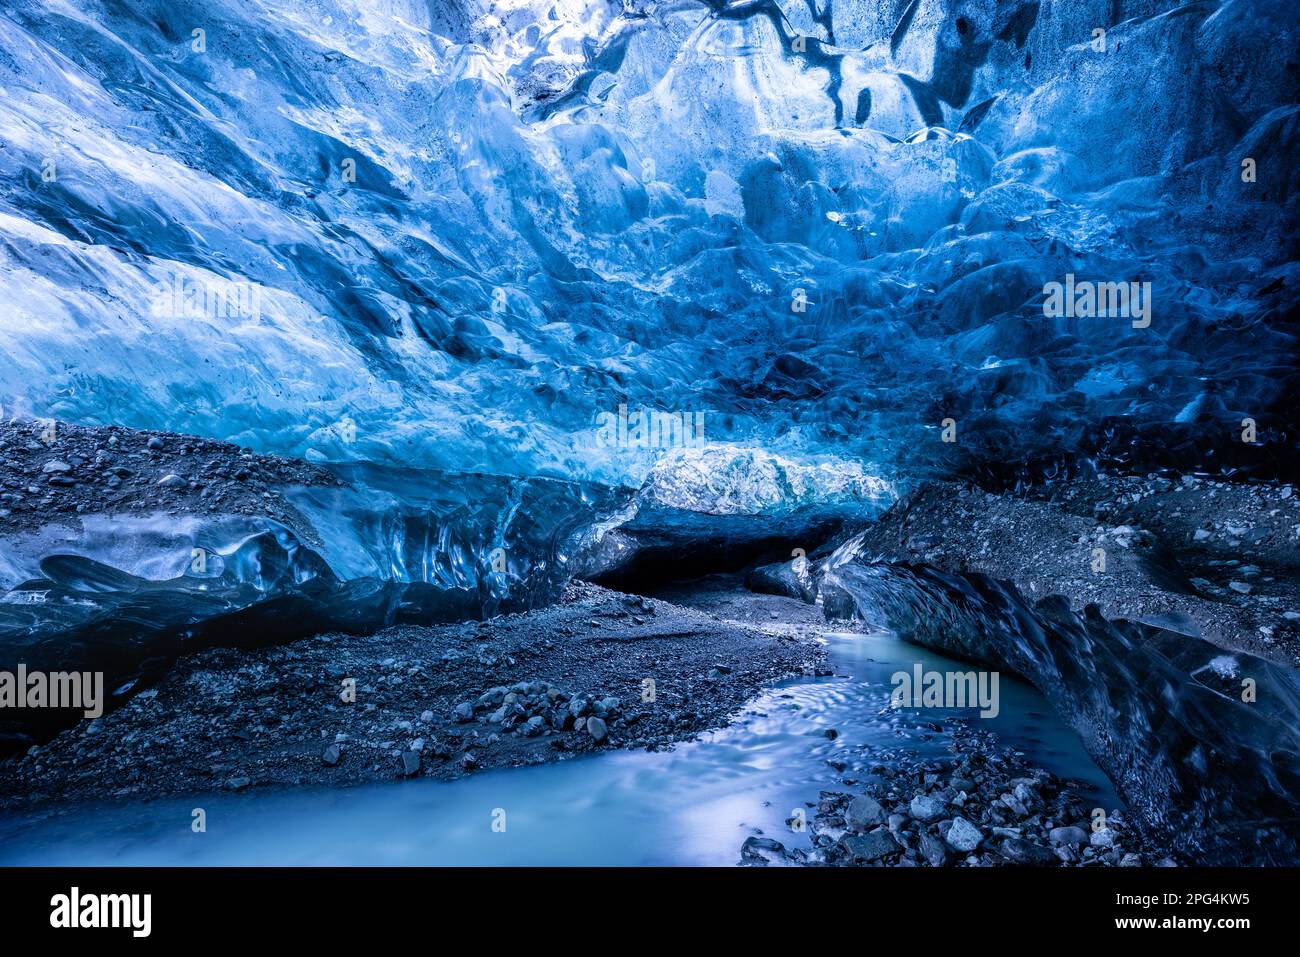 Grotte de glace Sapphire Breiðamerkurjökull du parc national de Vatnajökull, Islande Banque D'Images